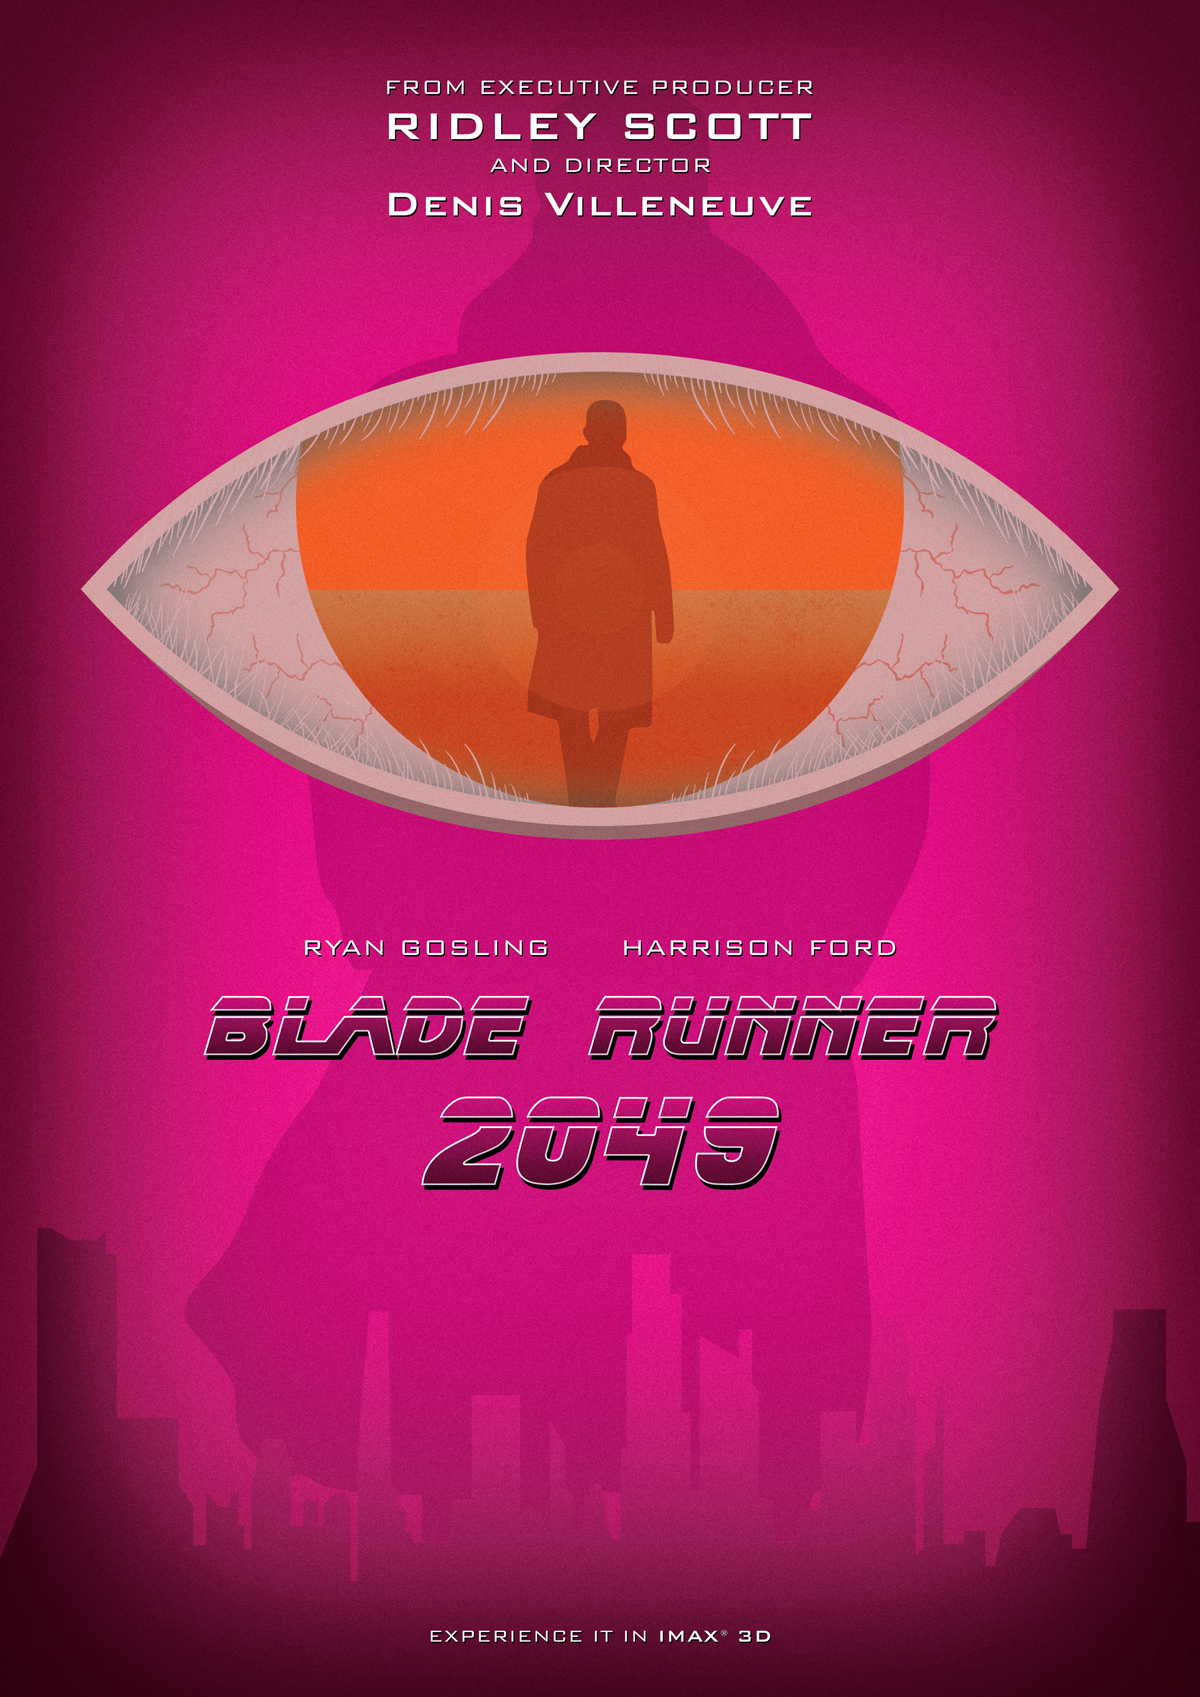 Blade Runner 2049 Alternative Movie Poster - PosterSpy - 1200 x 1697 jpeg 1838kB